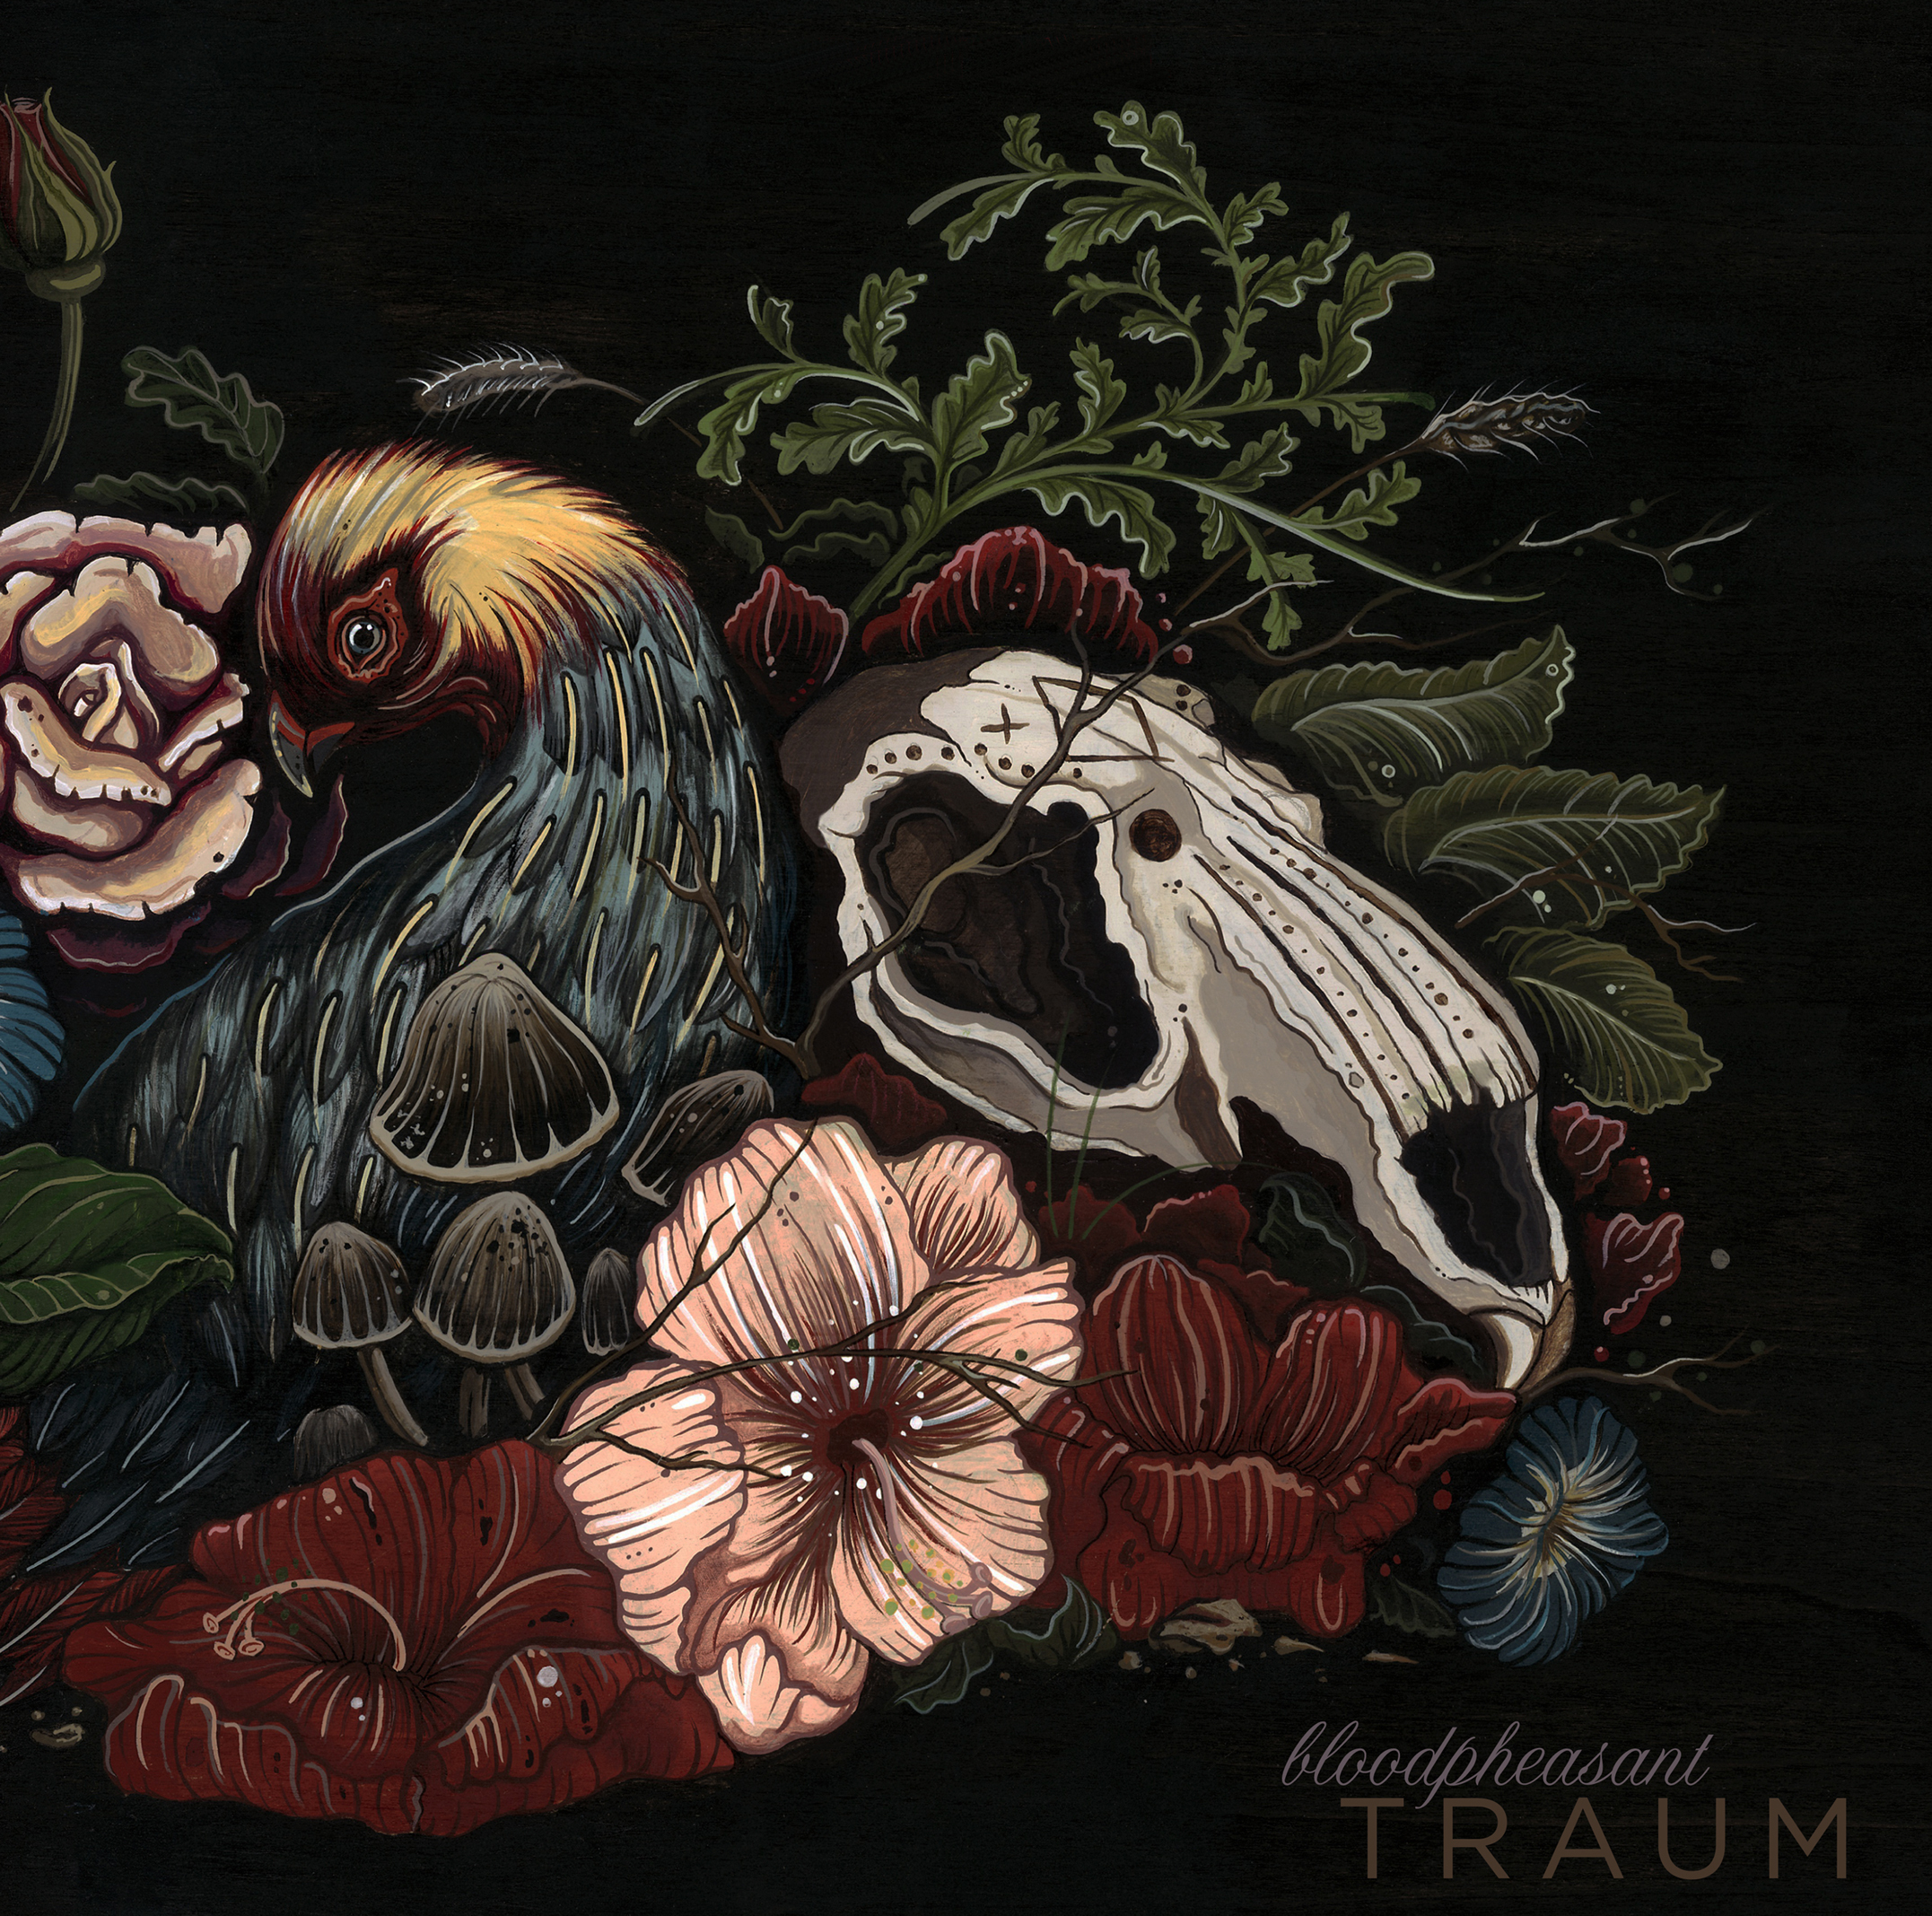 Bloodpheasant - Traum LP (random marble vinyl)